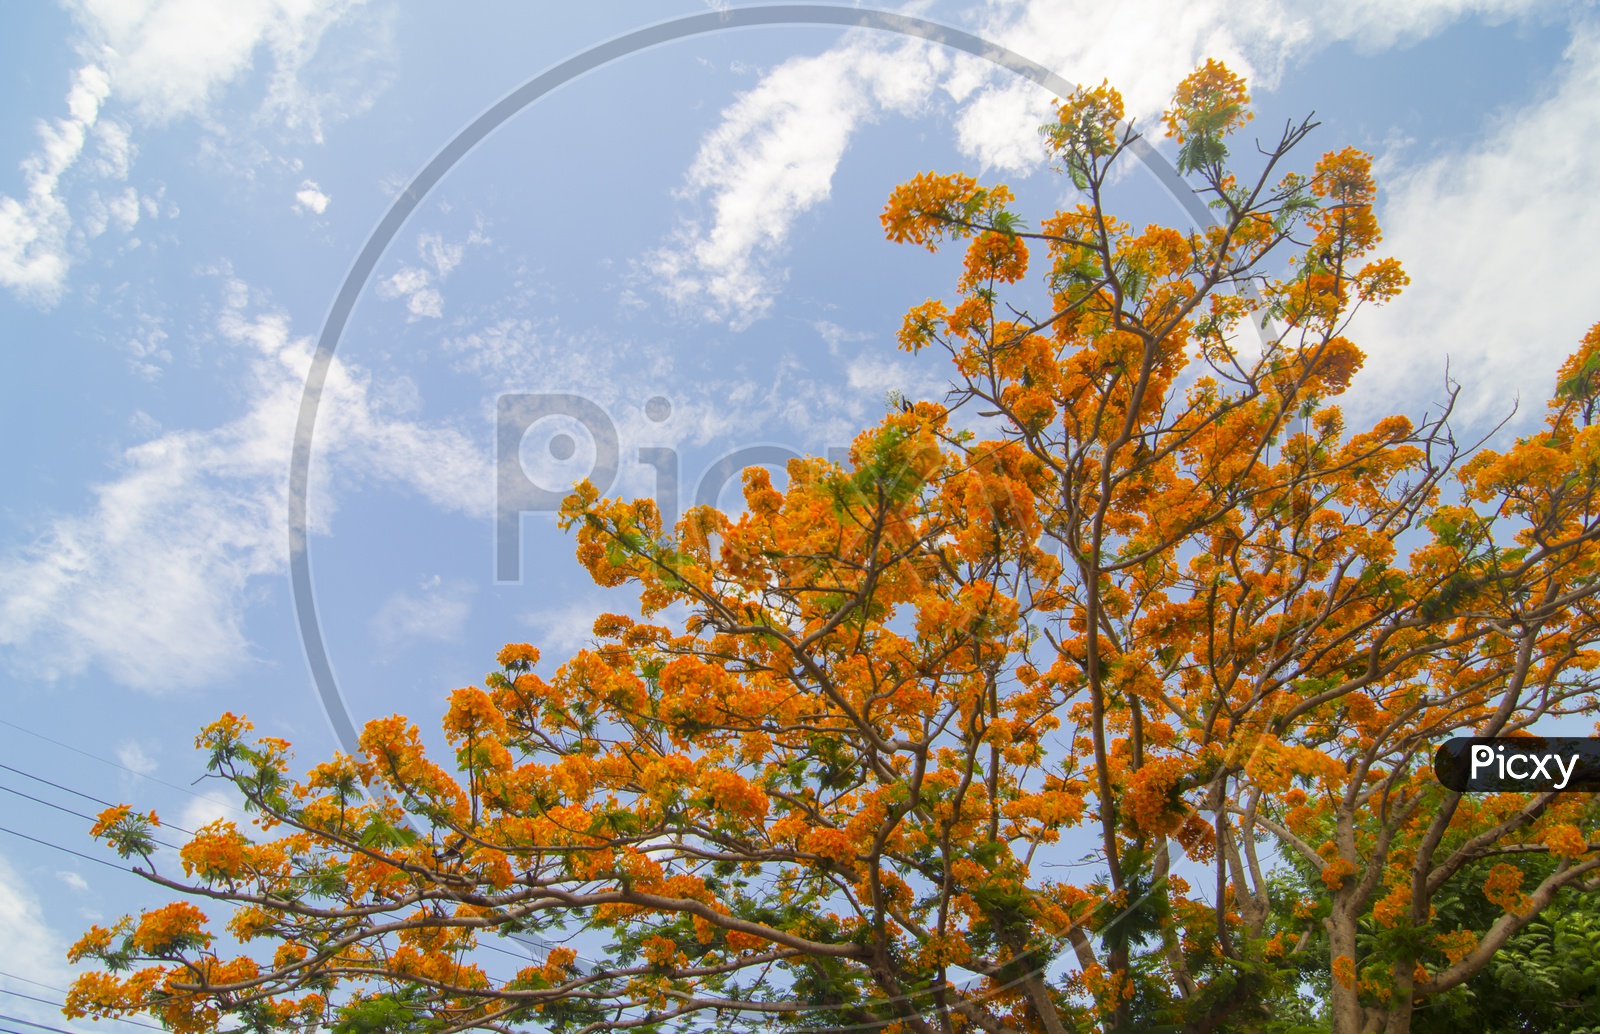 Delonix Regia Tree With Flowers Over blue sky